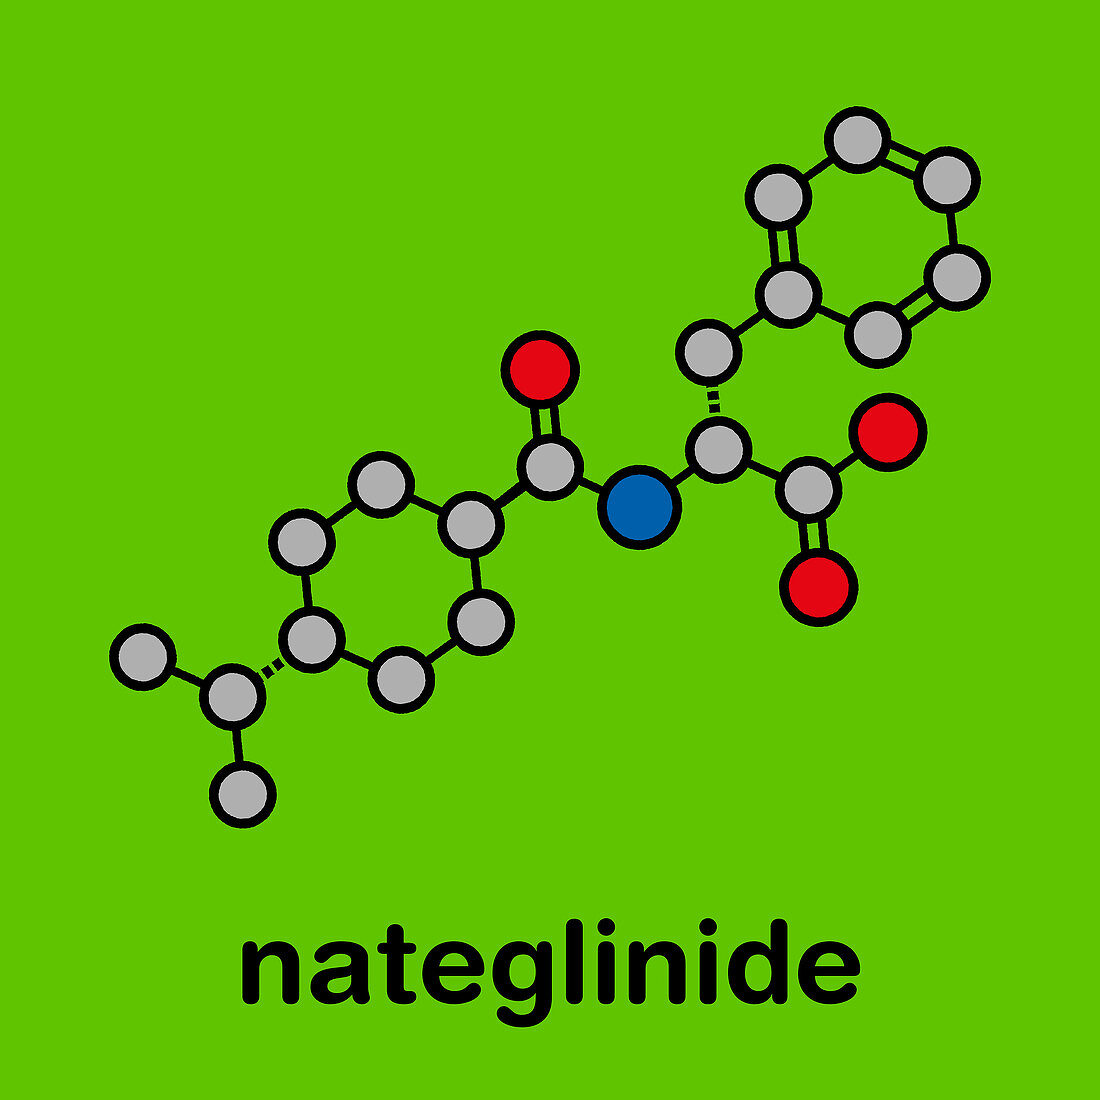 Nateglinide diabetes drug molecule, illustration